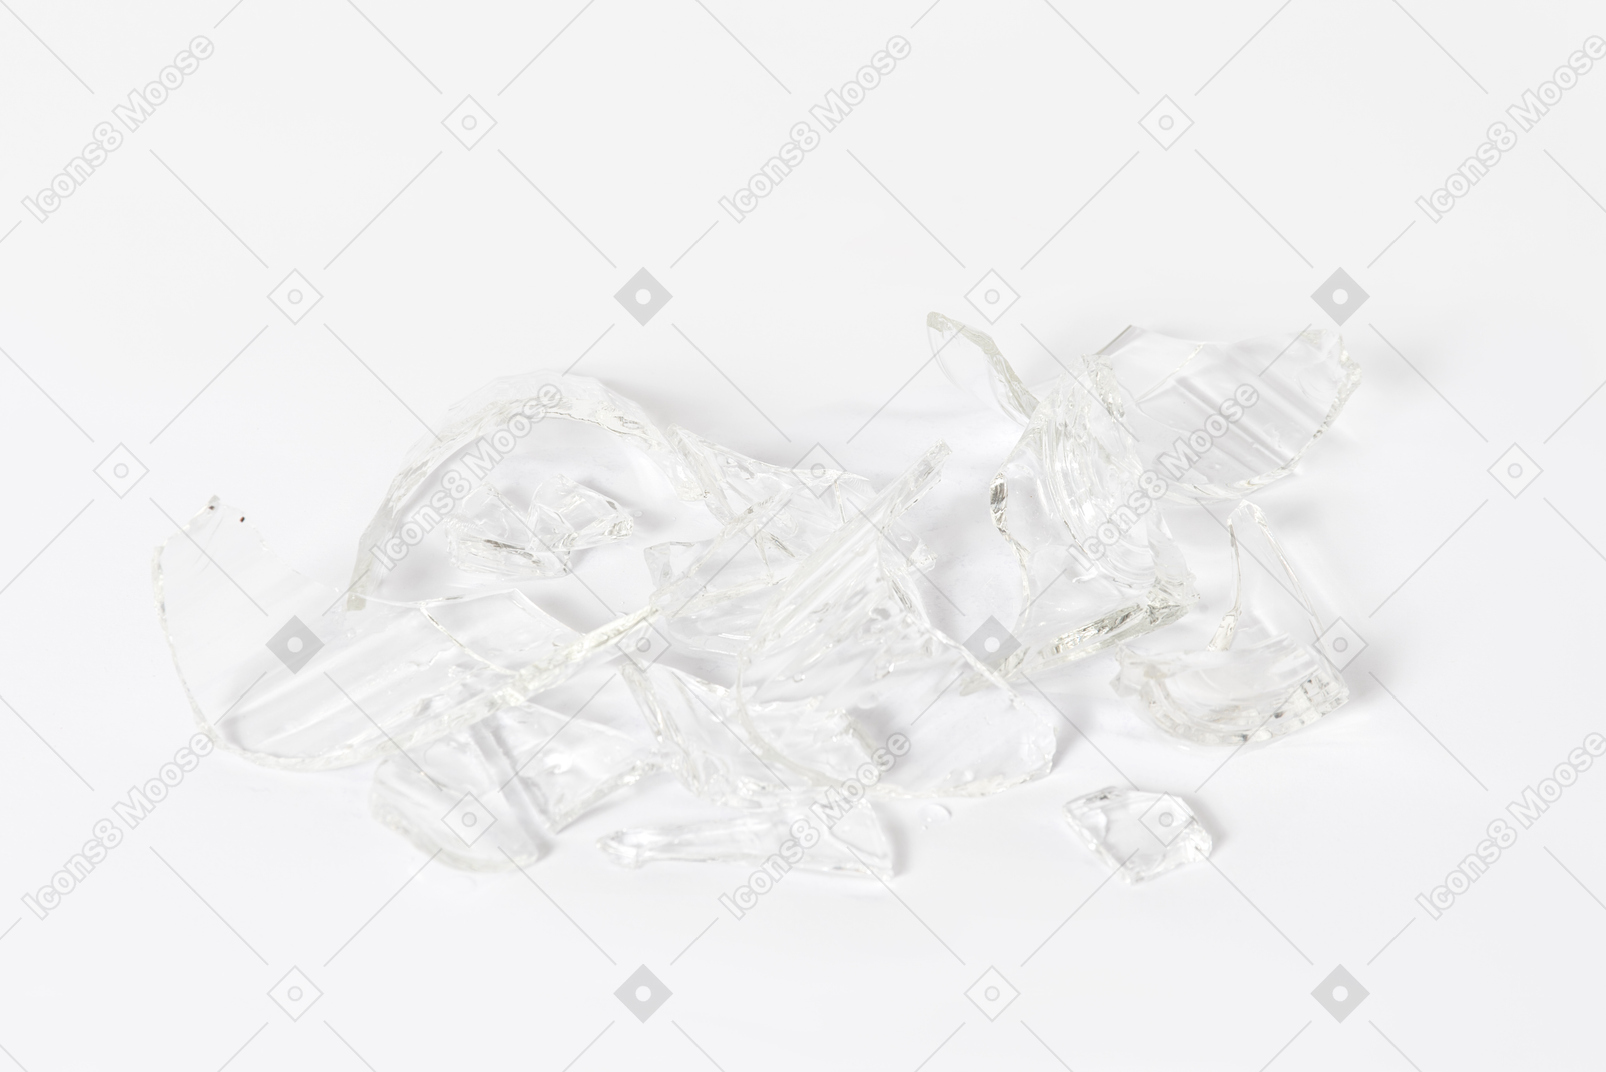 Broken glass pieces on white background